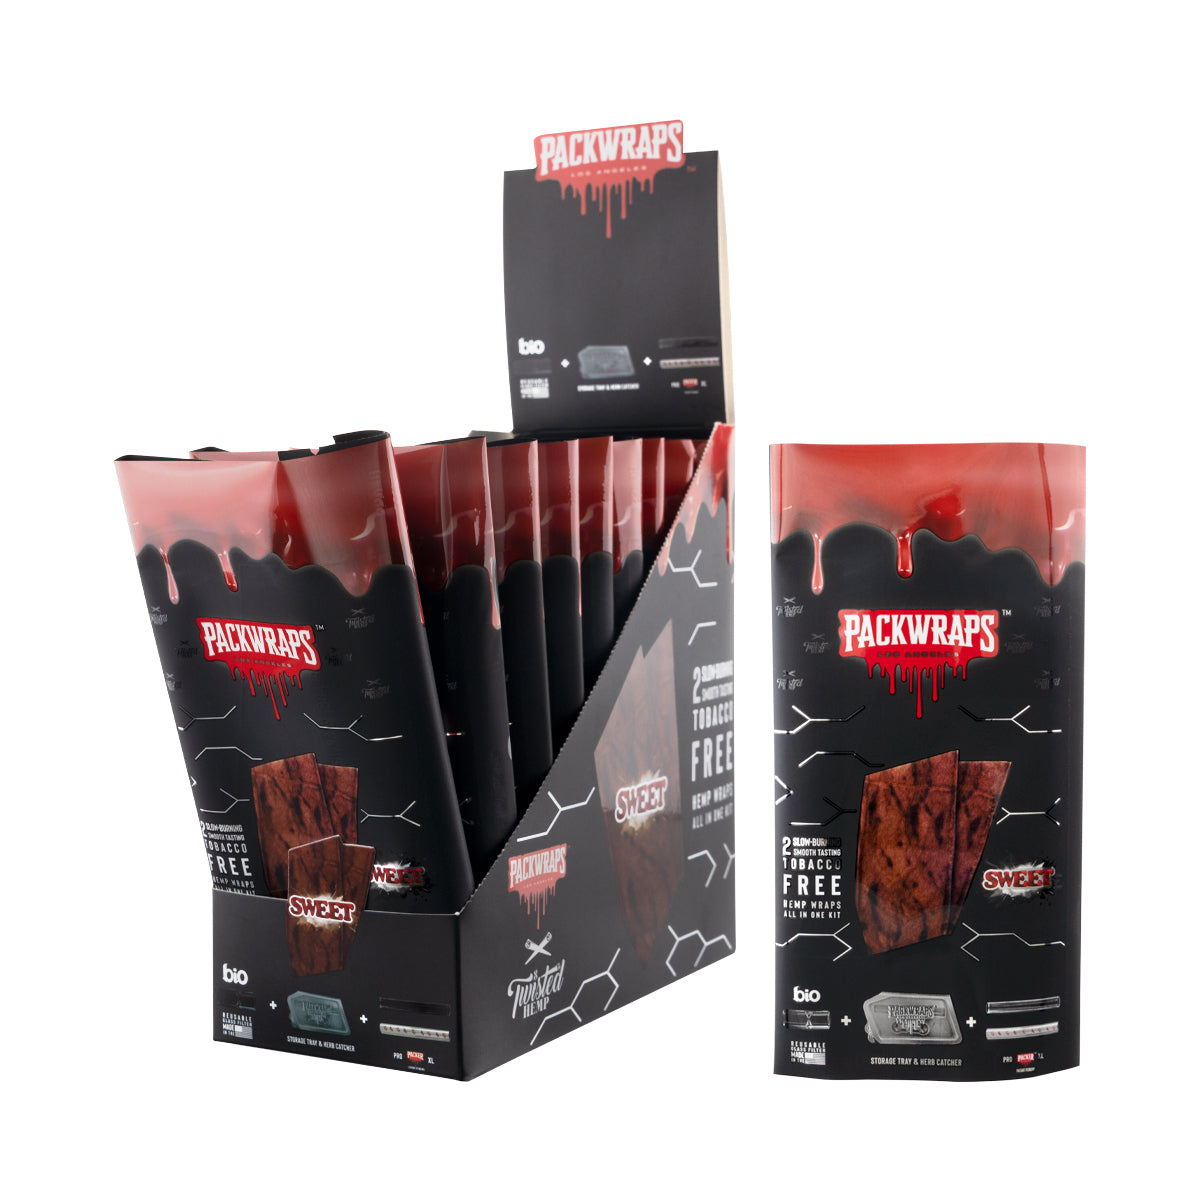 Packwraps X Twisted X Bio Wrap Kit - Sweet - 10 Pack Box